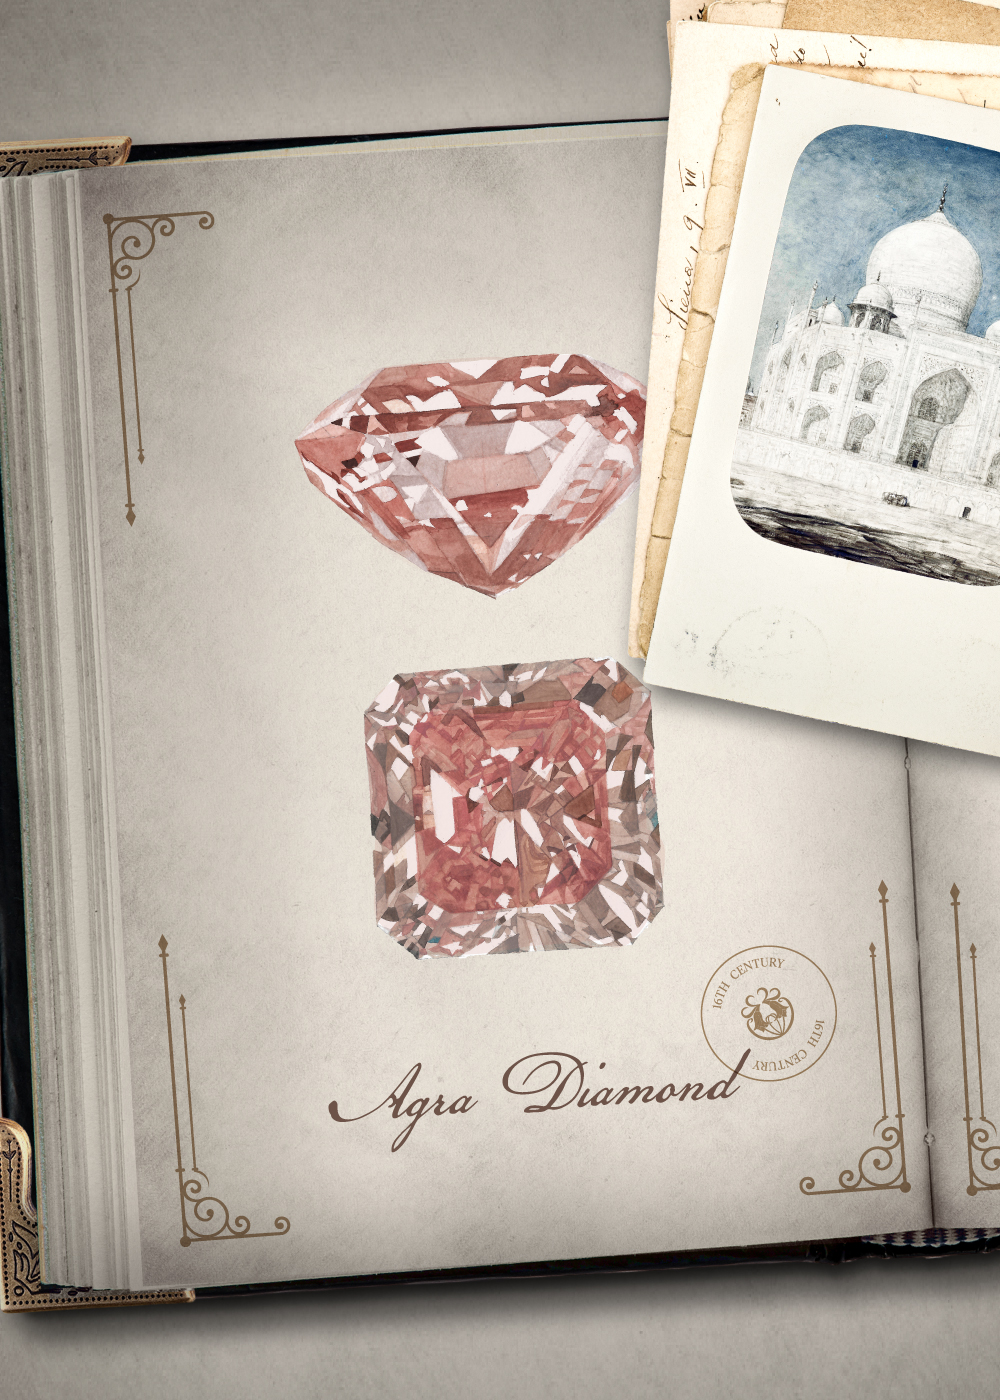 The Pink Agra Diamond